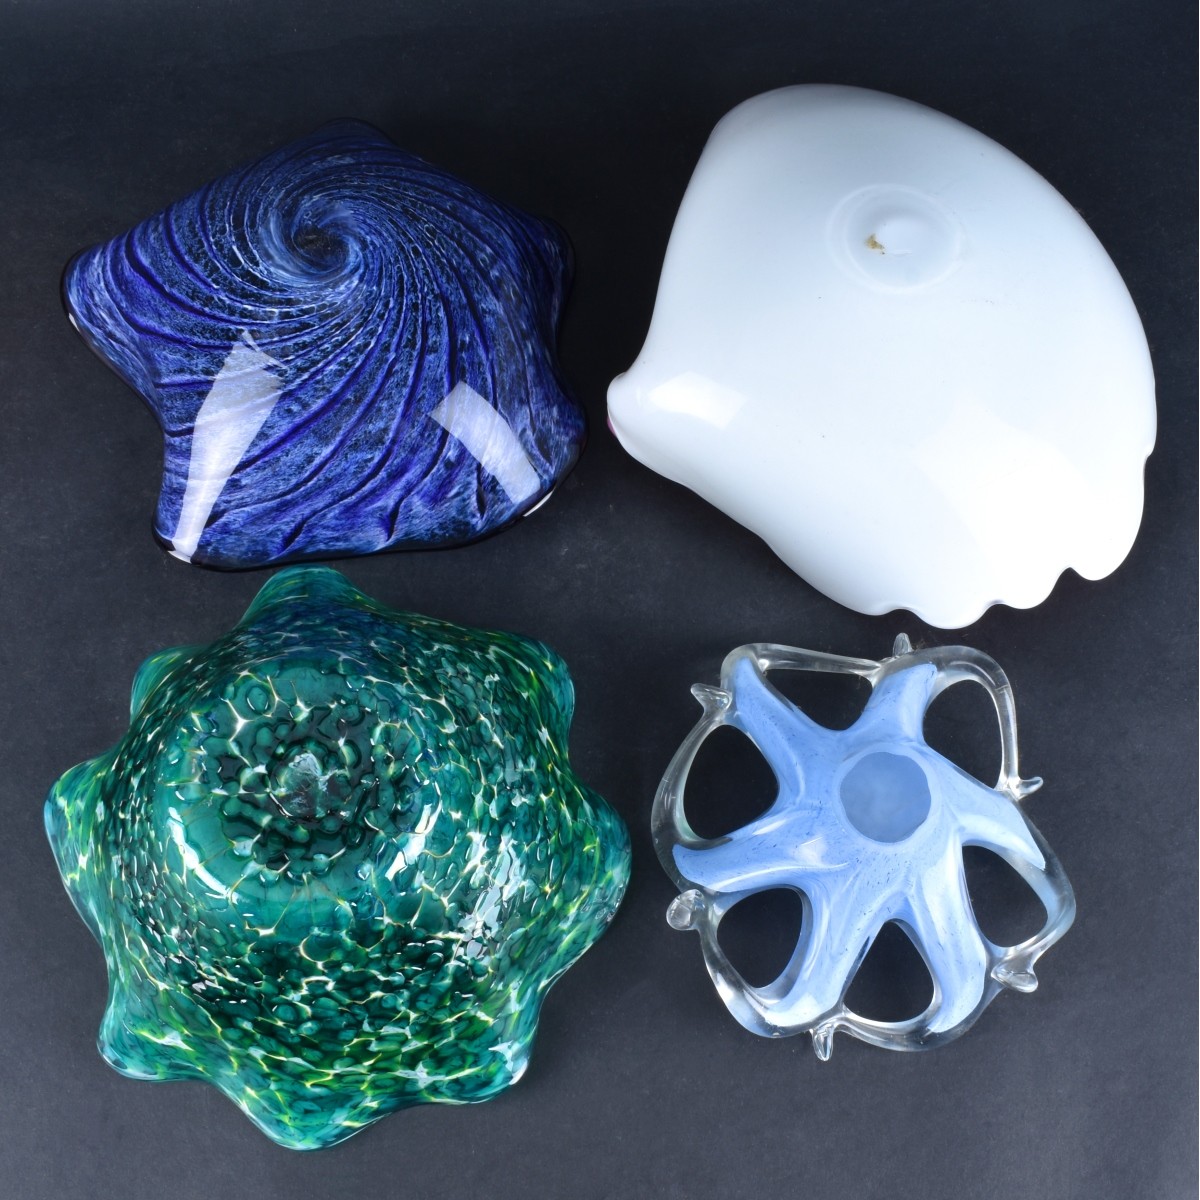 Four (4) Art Glass Bowls